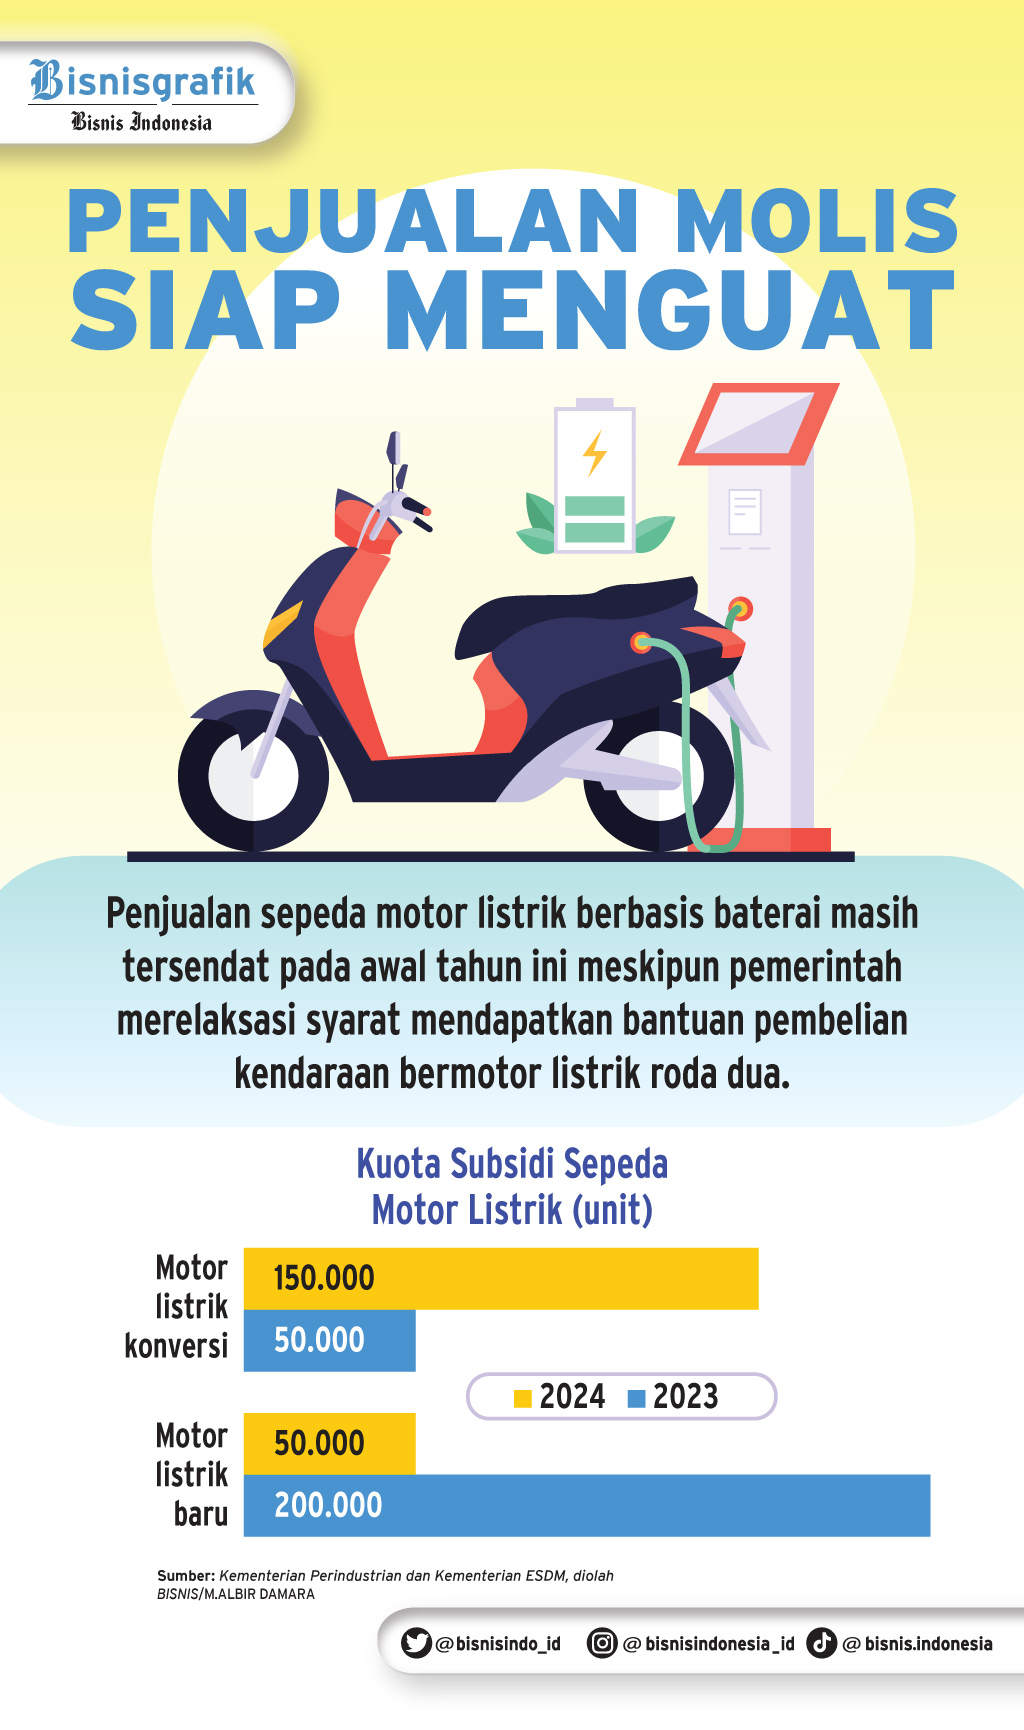  Subsidi Motor Listrik Masih Rendah, OJK Ungkap Tantangan Kredit di Indonesia